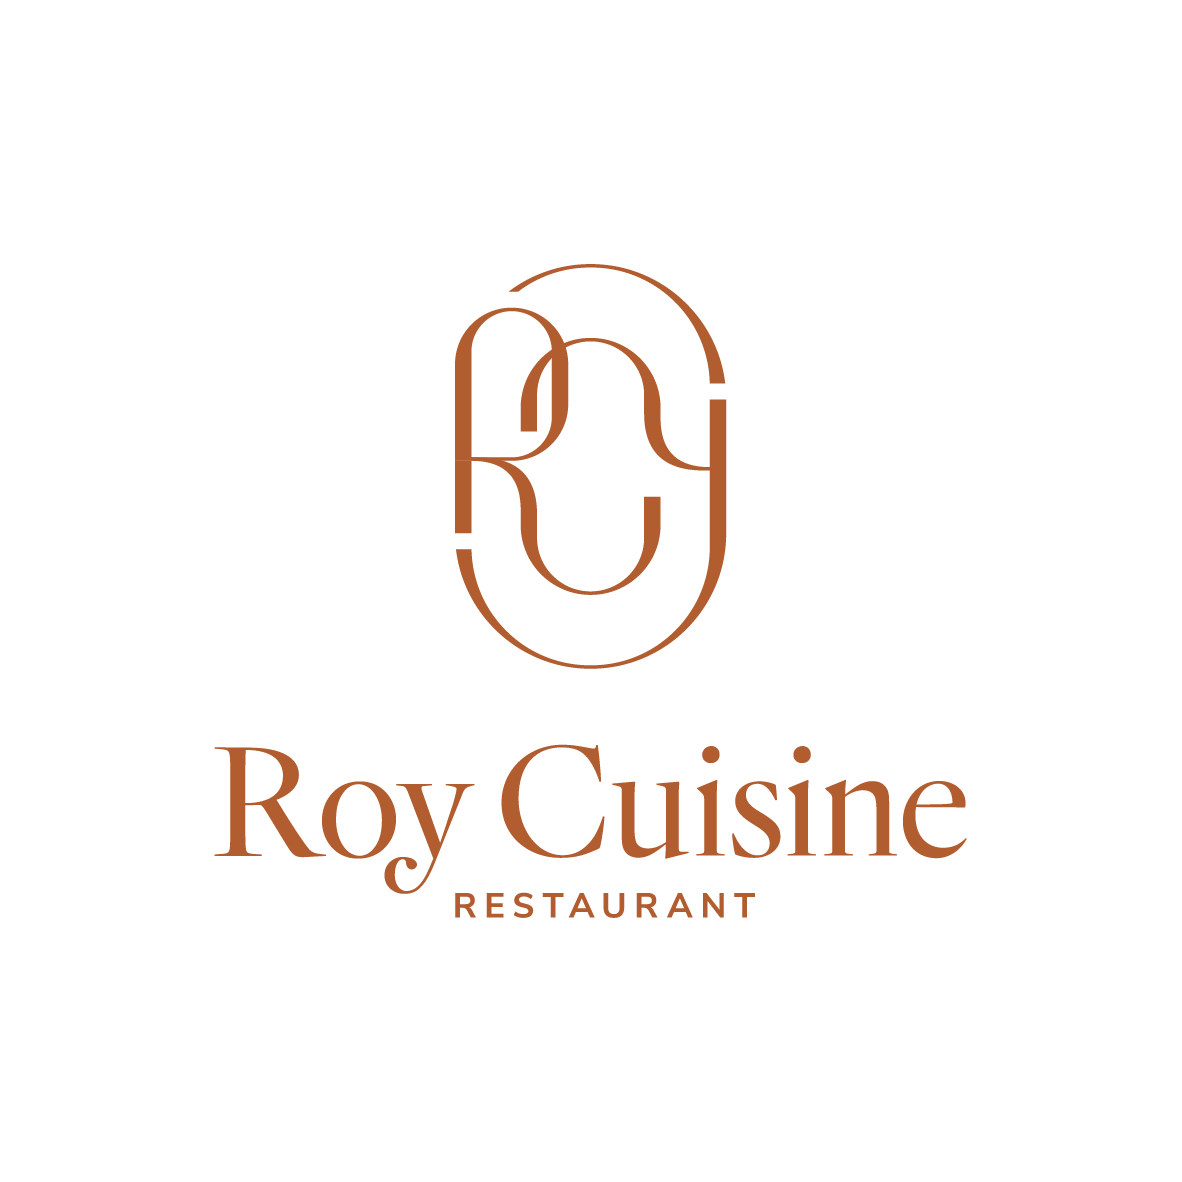 Roy Cuisine